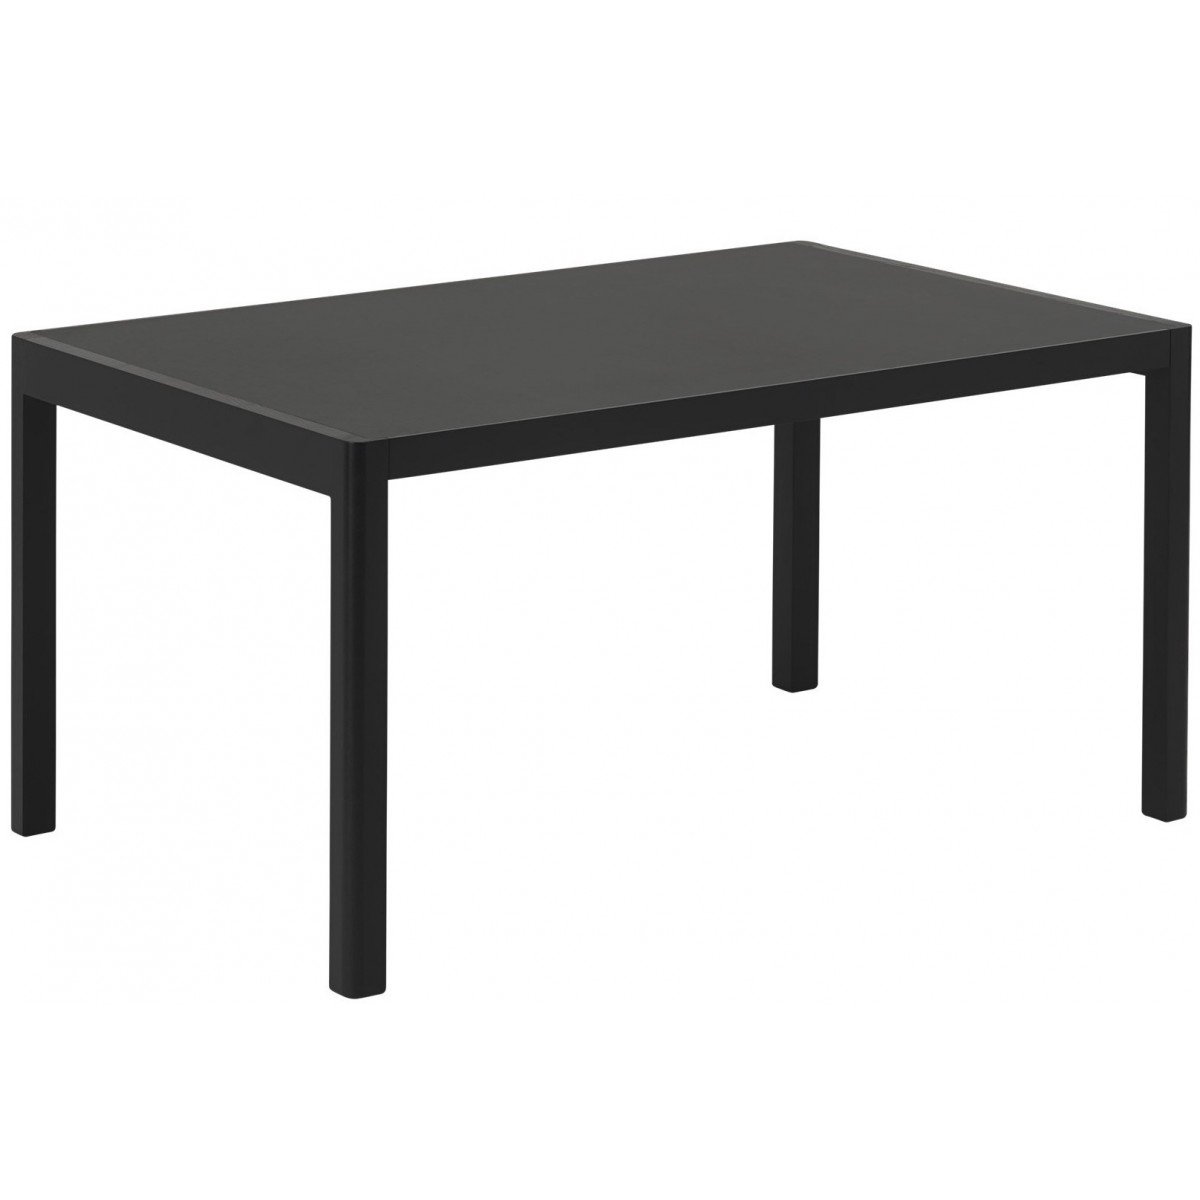 140 x 92 cm – black linoleum tabletop + black base – Workshop Table